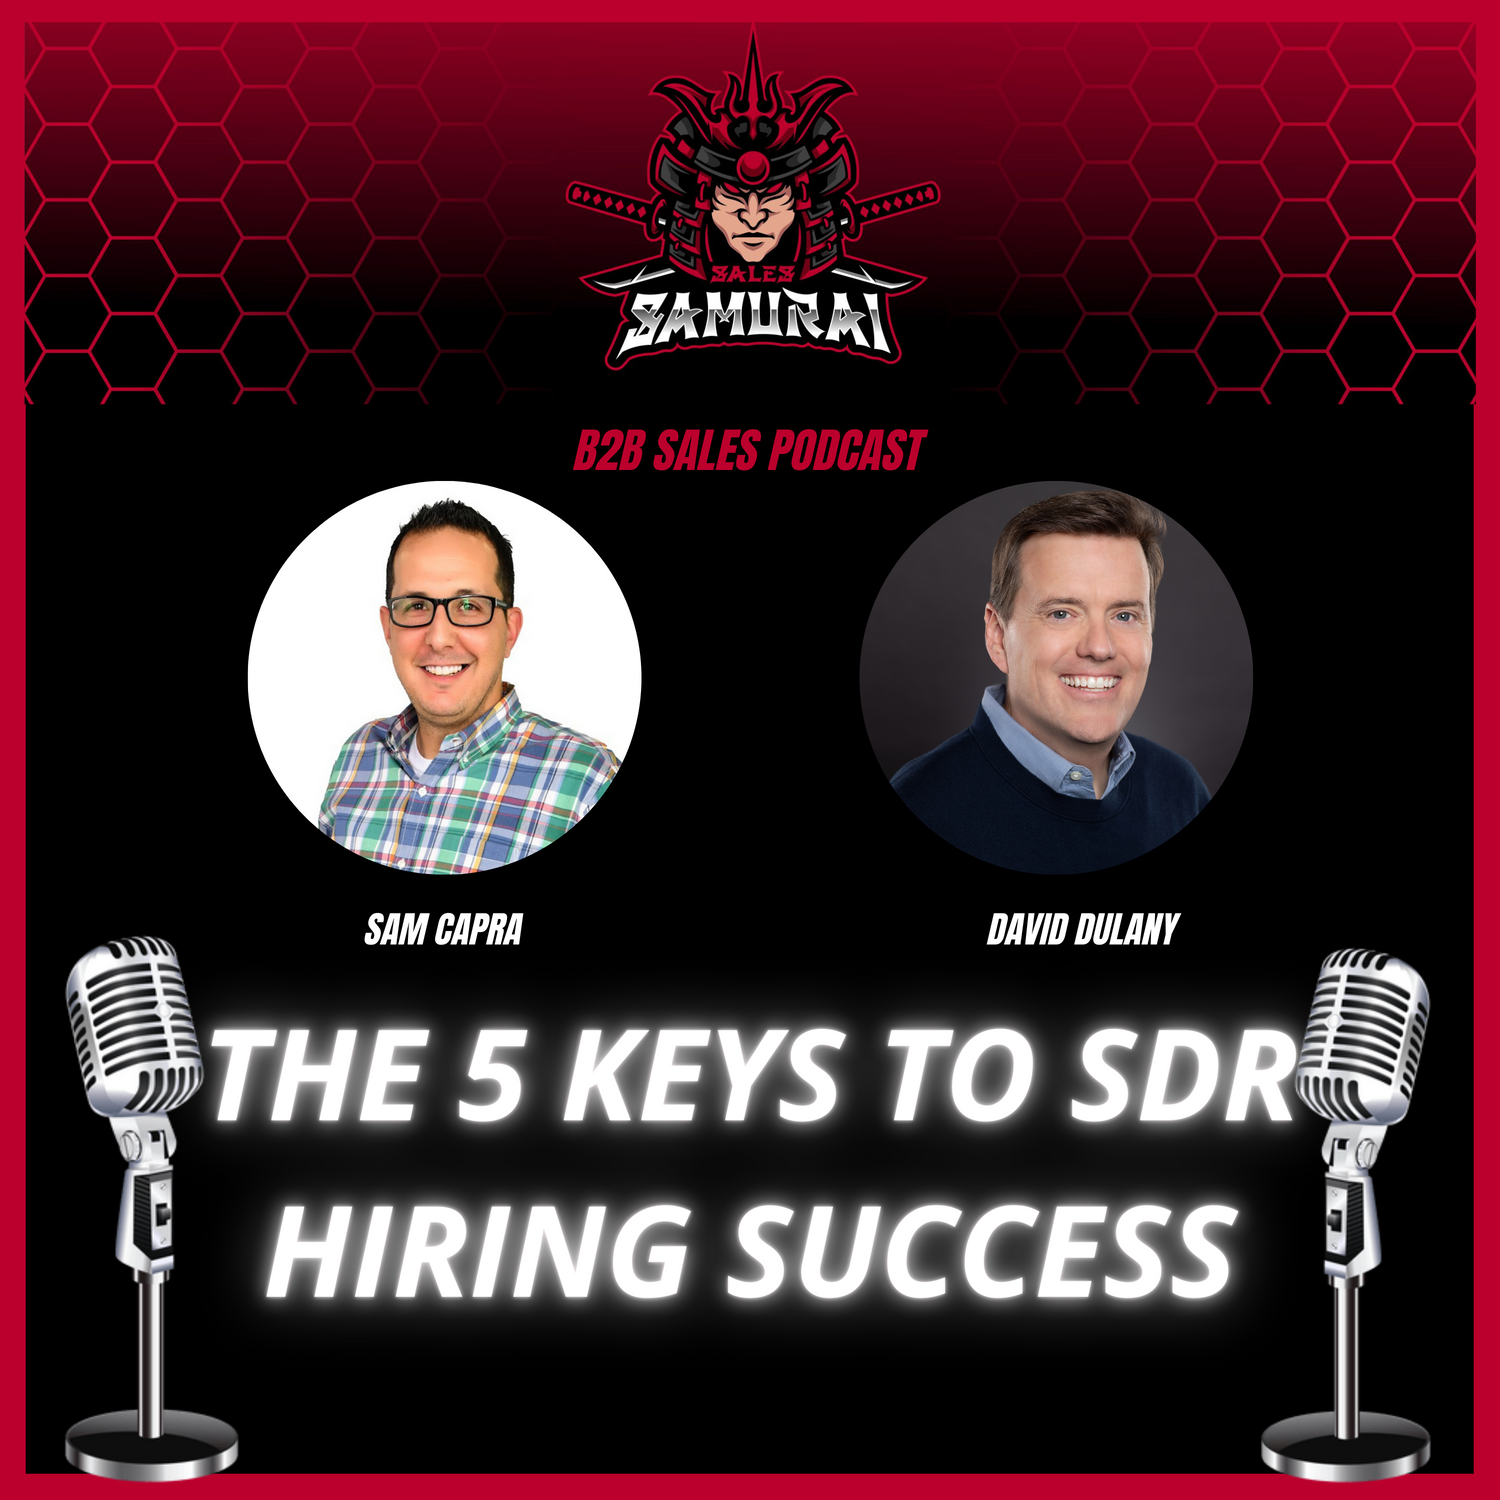 The 5 Keys to SDR Hiring Success Image